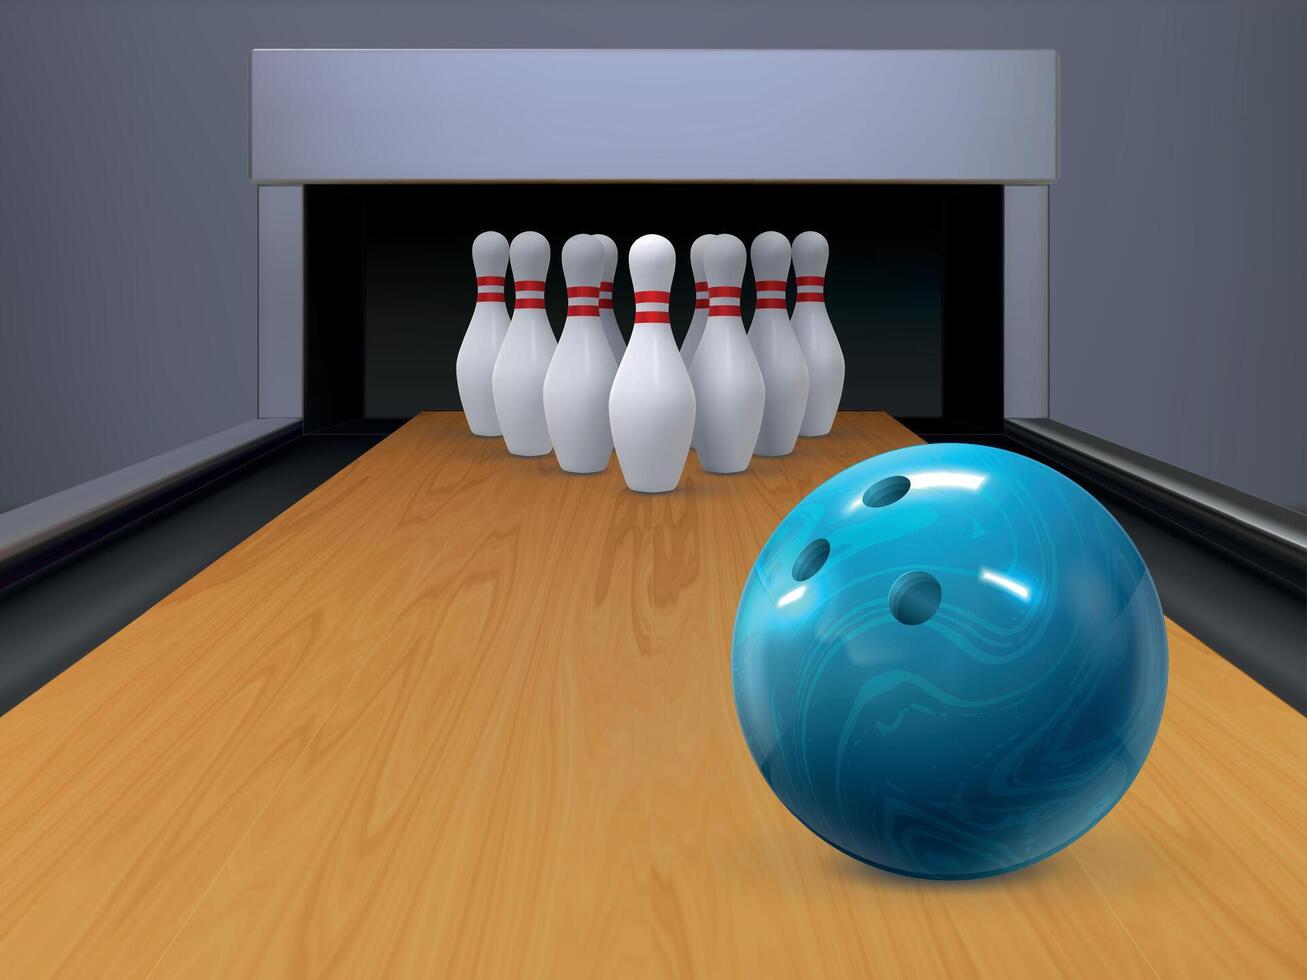 realistisch bowling hout rijbaan met rollend bal en kegelvormig pinnen. sport kom spel wedstrijd steeg. bowling club spelen vector achtergrond